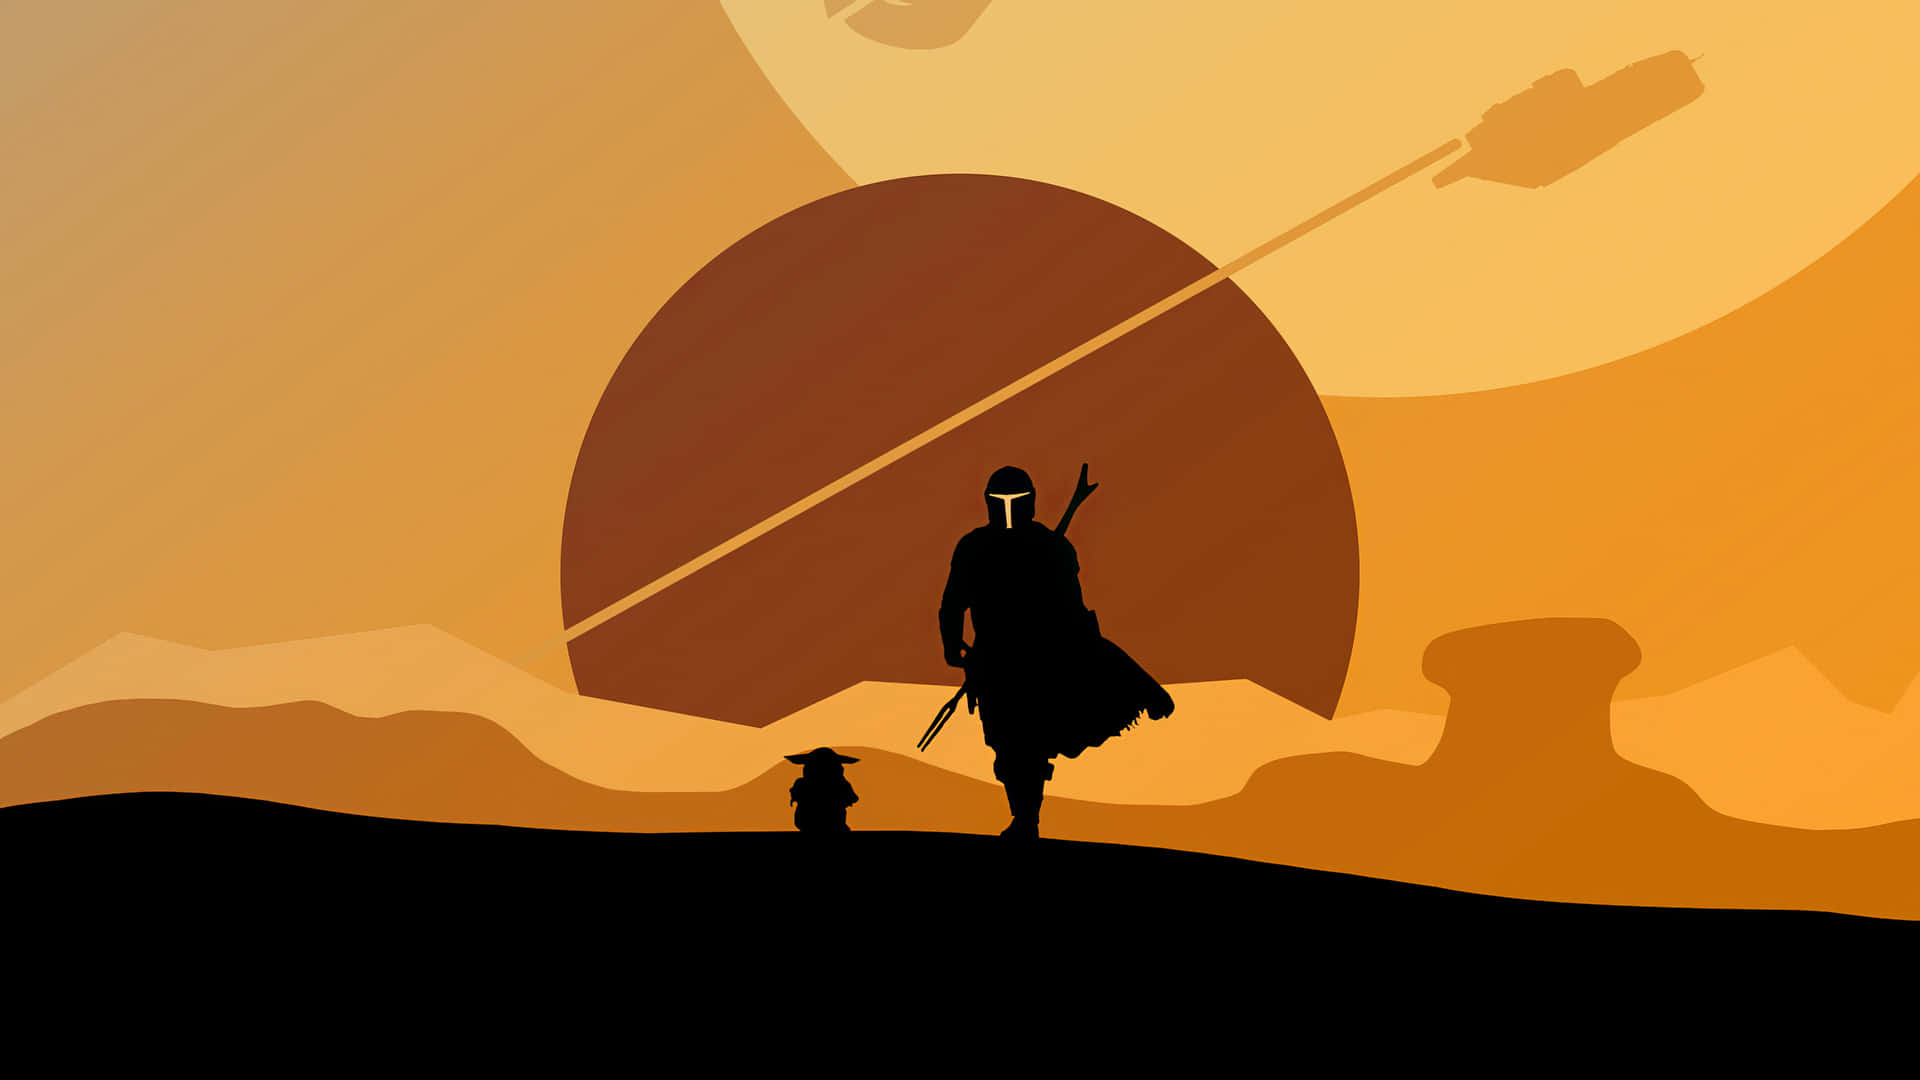 The Mandalorian traversing the alien desert landscape with his partner droid